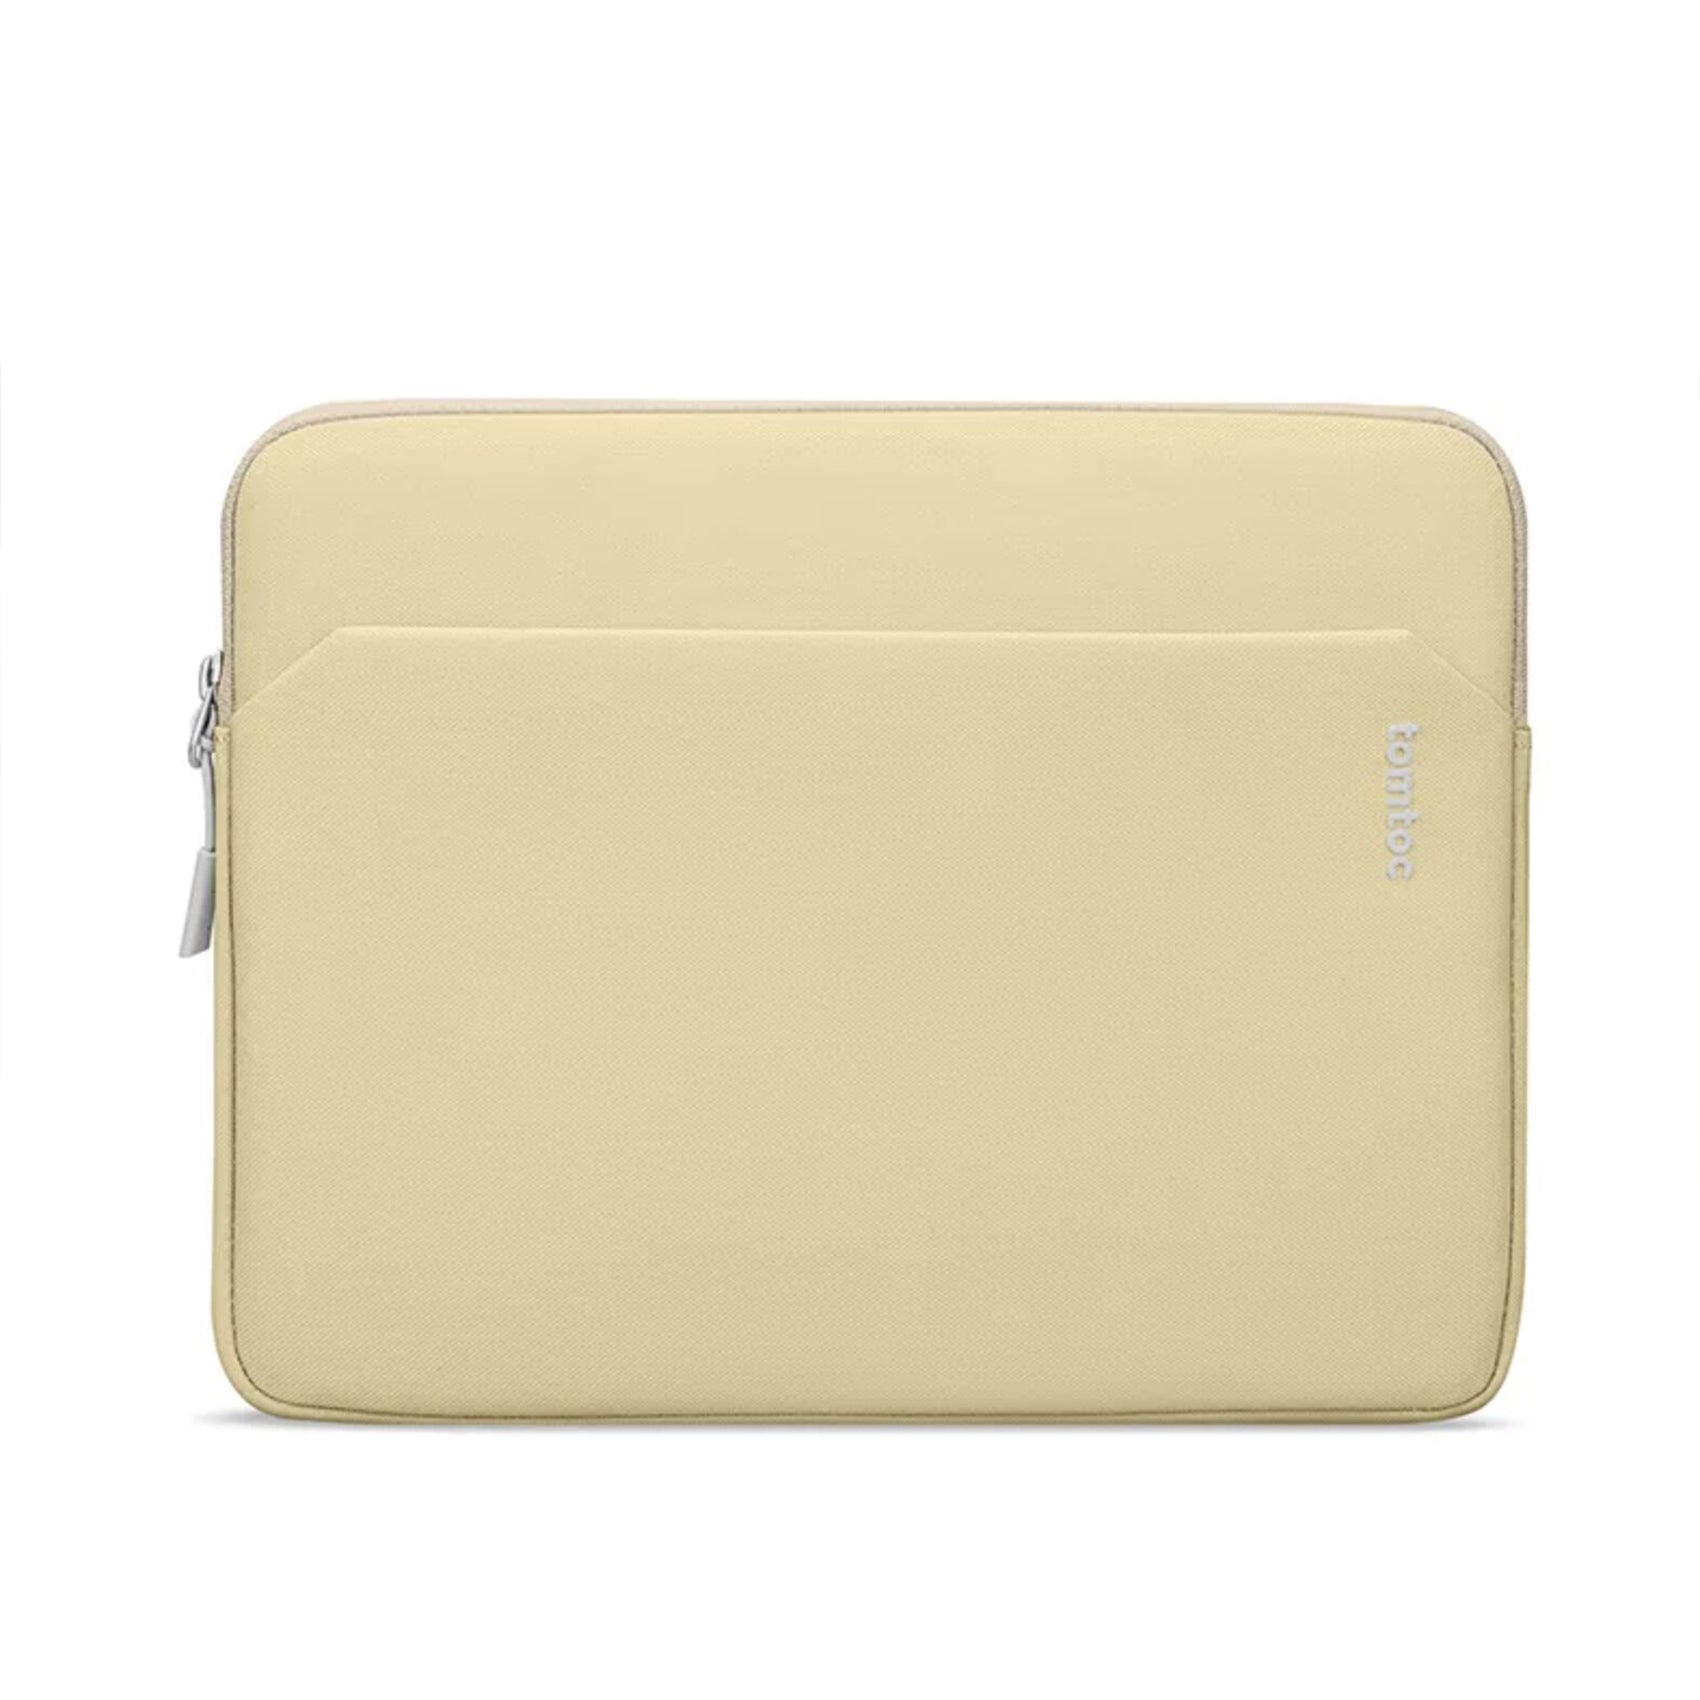 tomtoc 12.9 Inch Tablet Sleeve Bag - Khaki